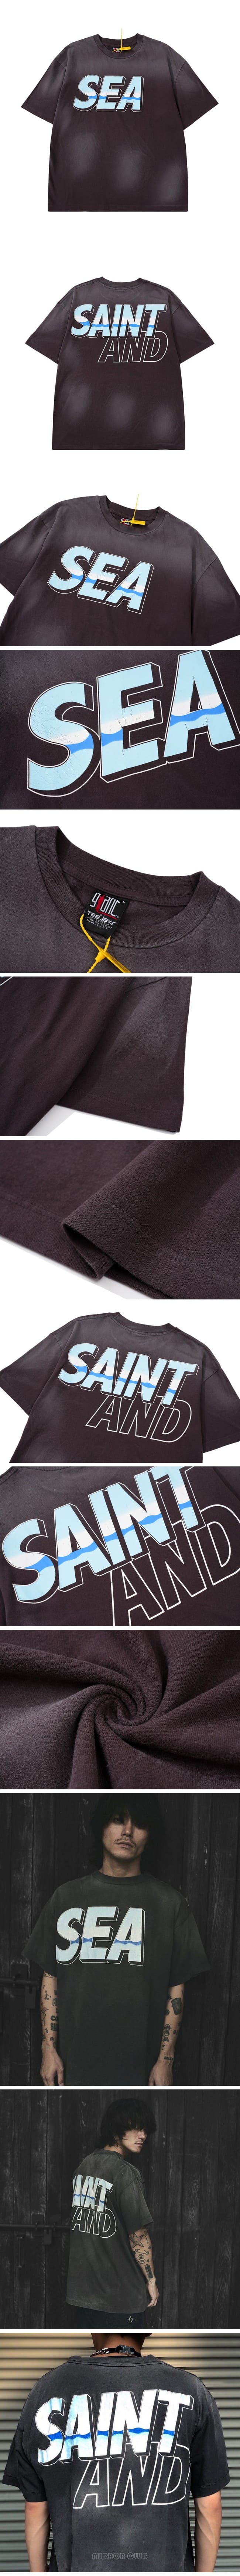 SAINT Mxxxxxx Saint and Sea Tee セントマイケル セントアンドシー Tシャツ